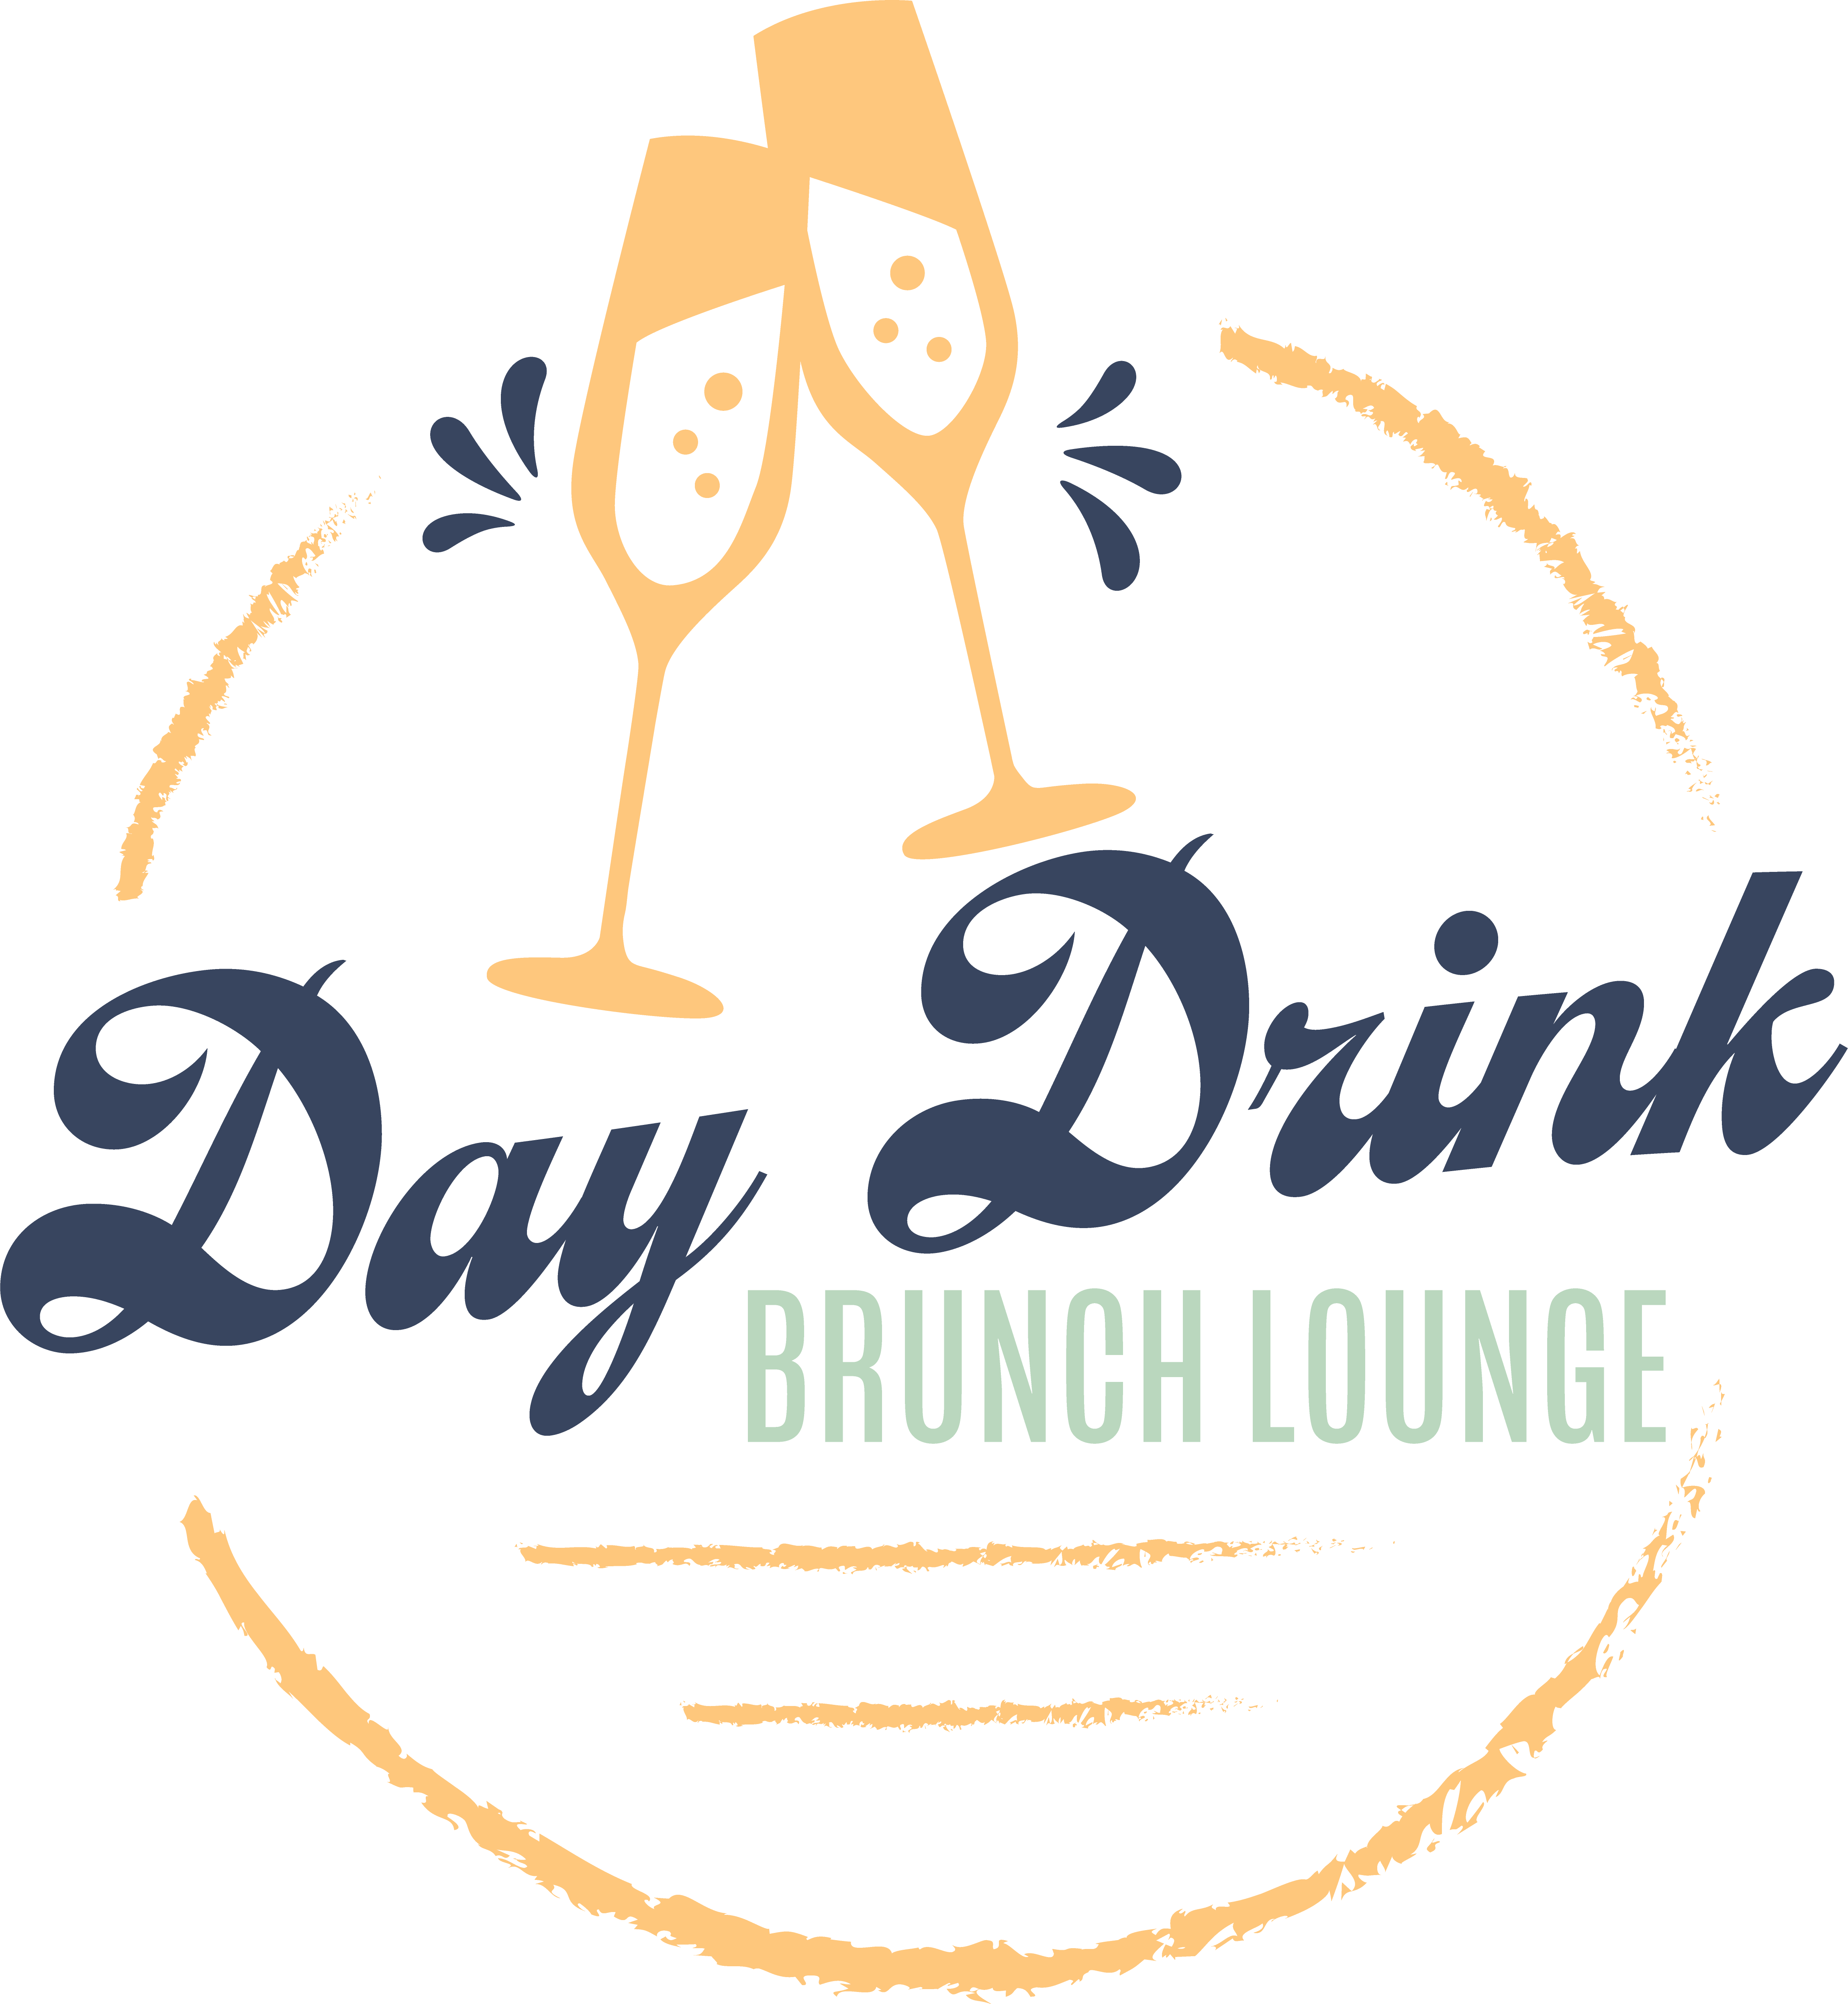 Day Drink Brunch Lounge 